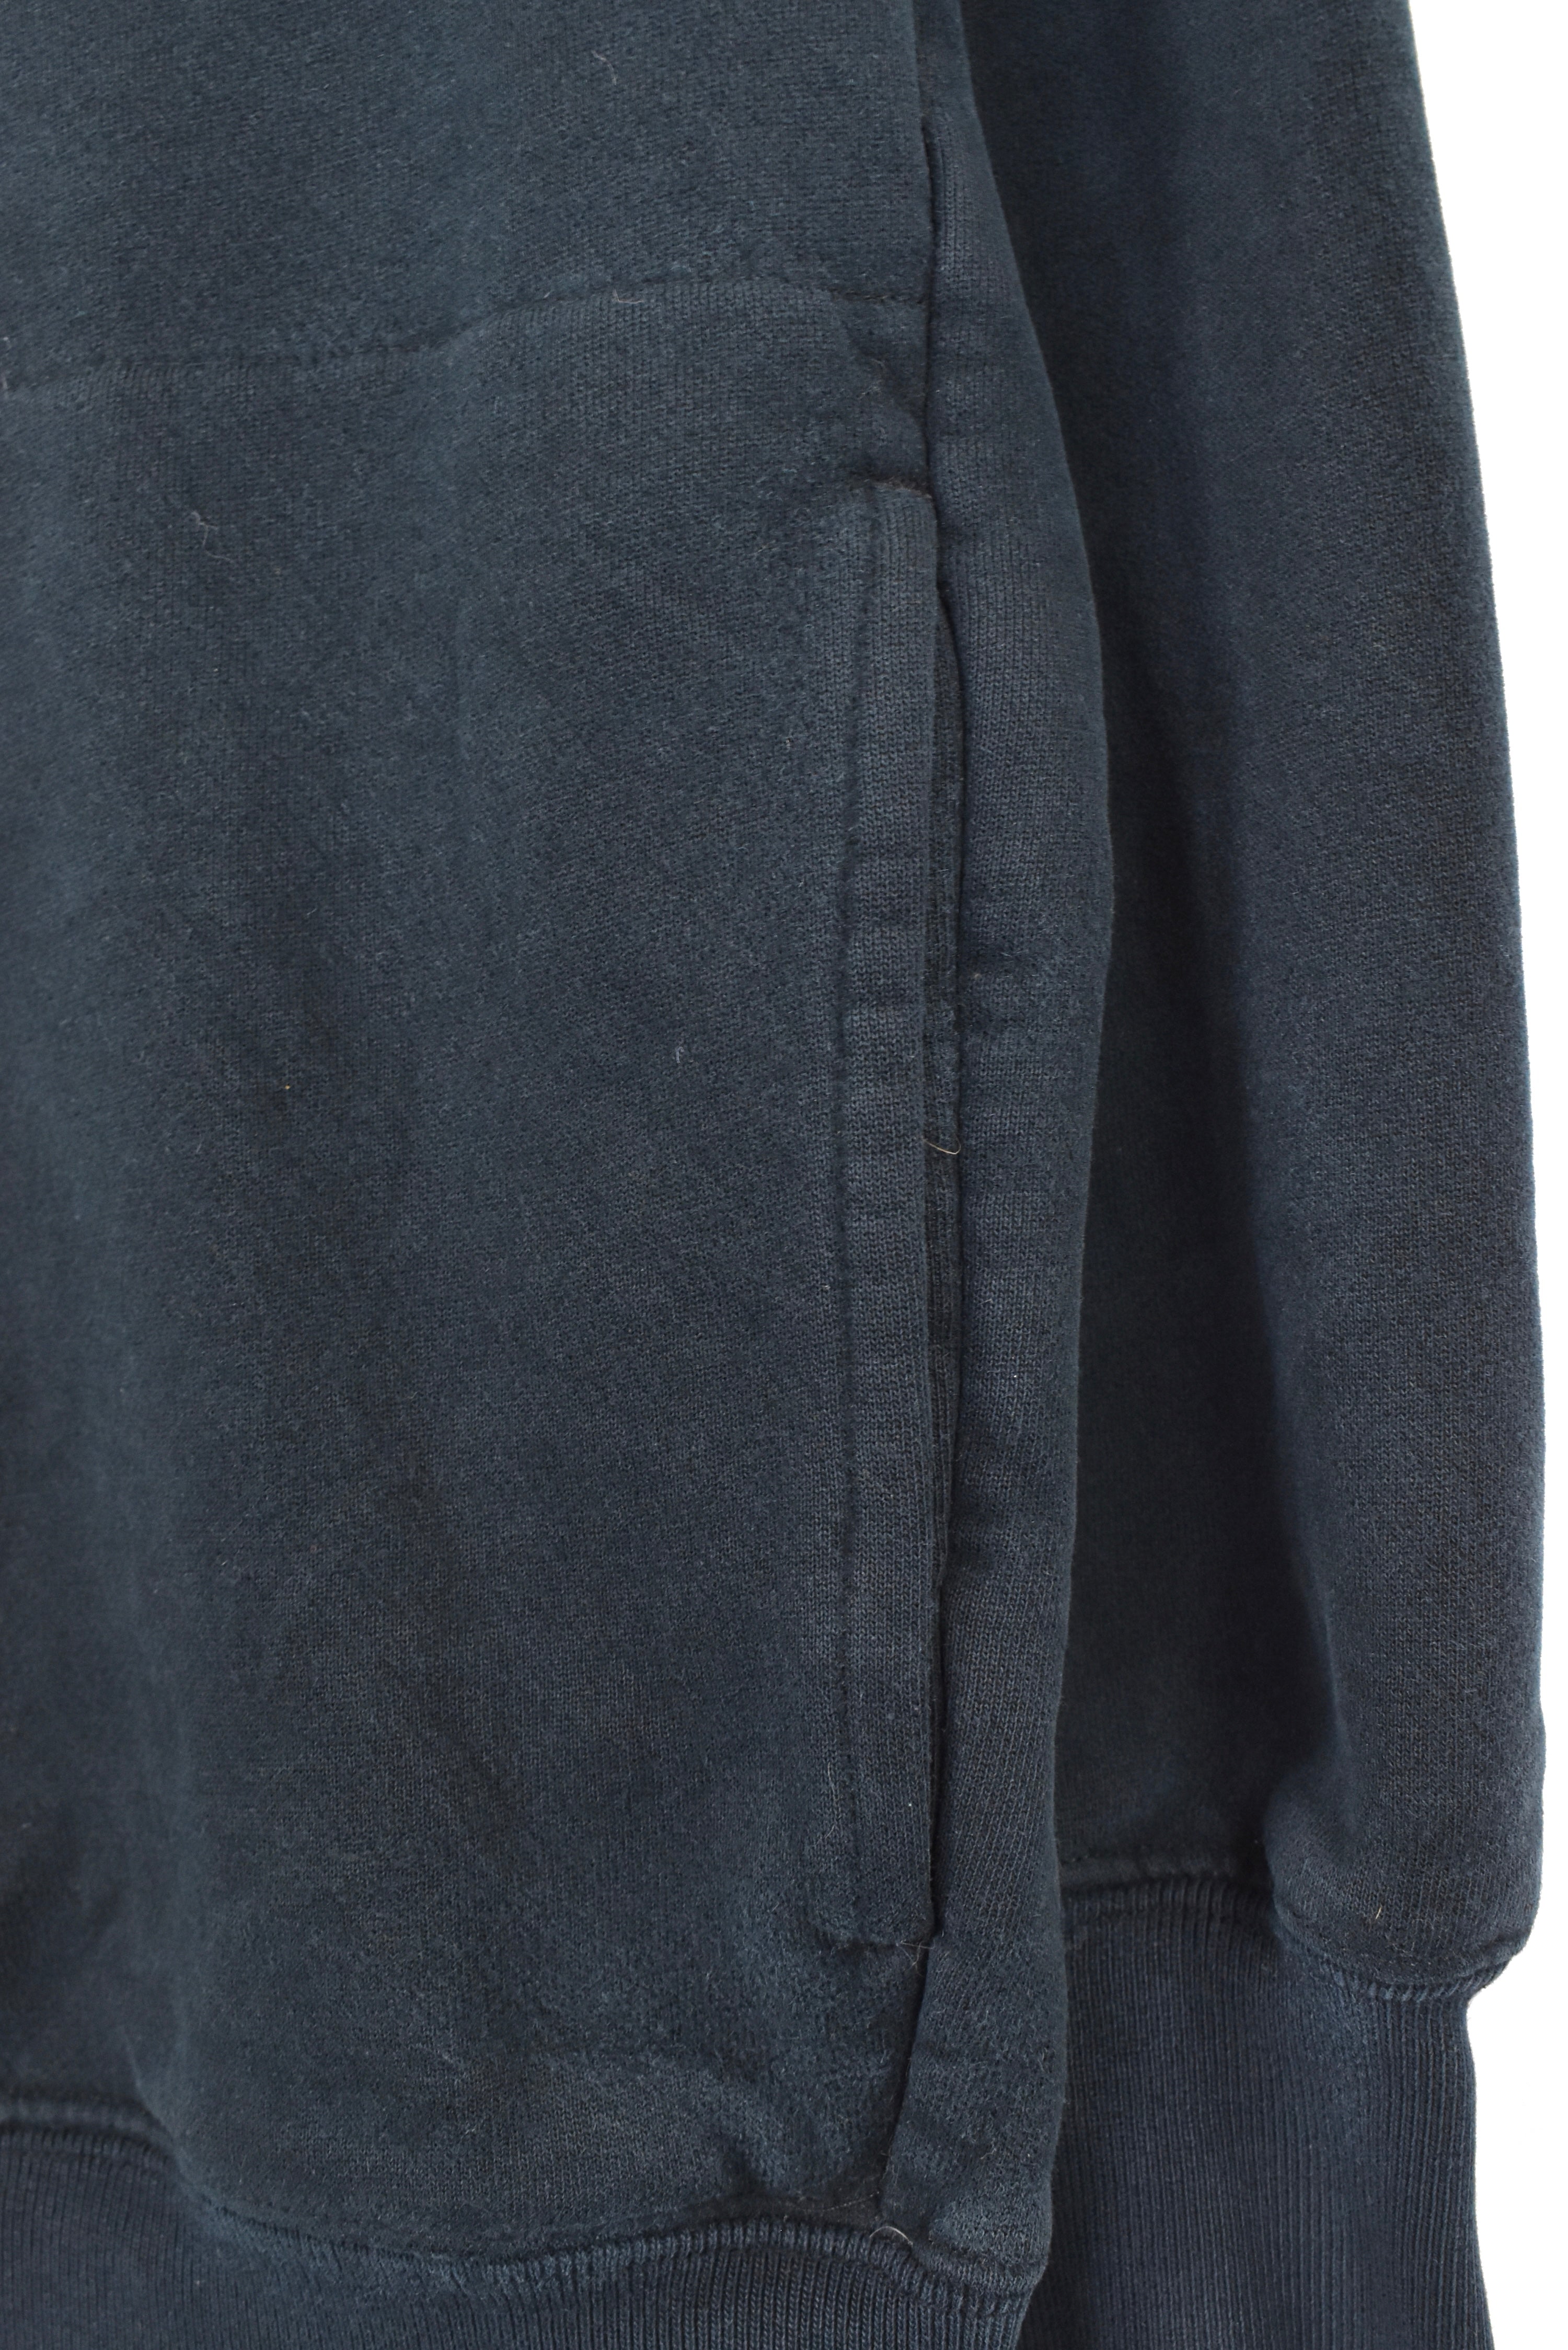 Vintage Nautica sweatshirt, black embroidered 1/4 zip jumper - AU L NAUTICA